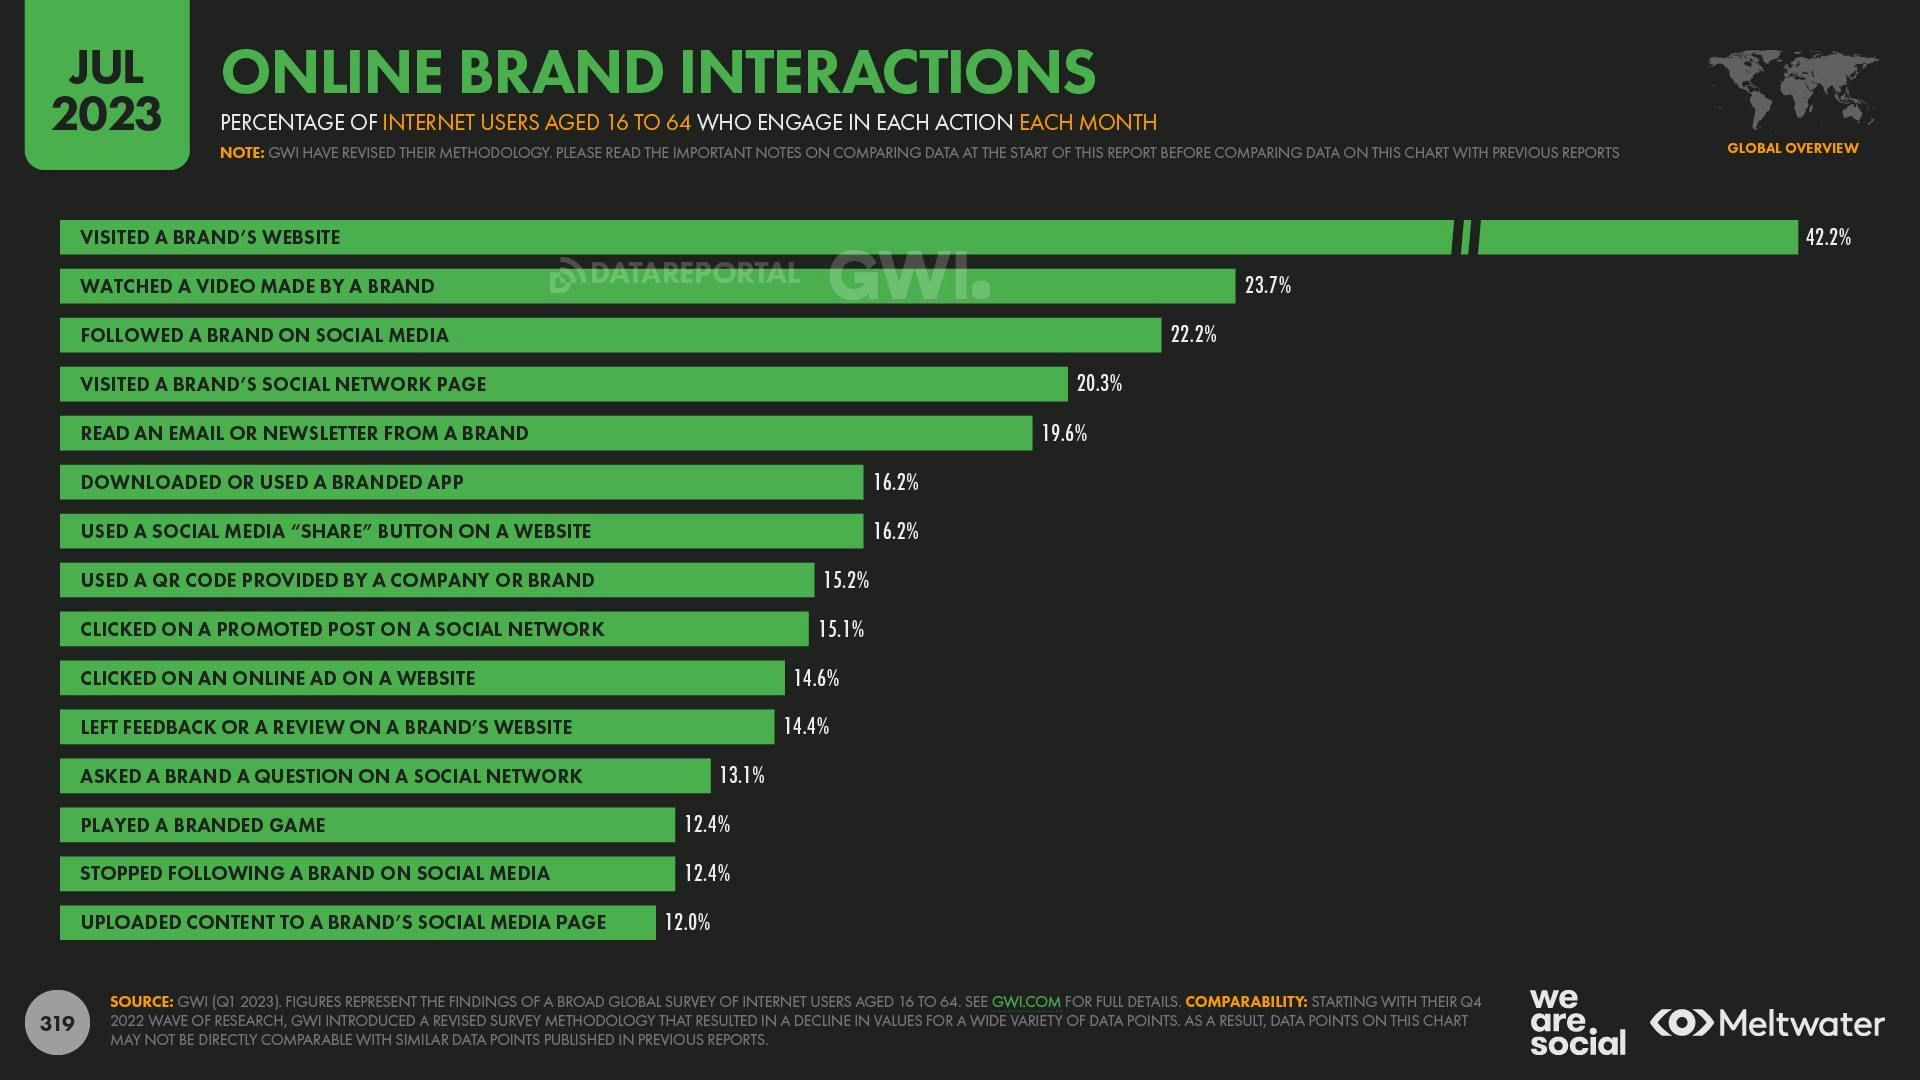 Online brand interactions